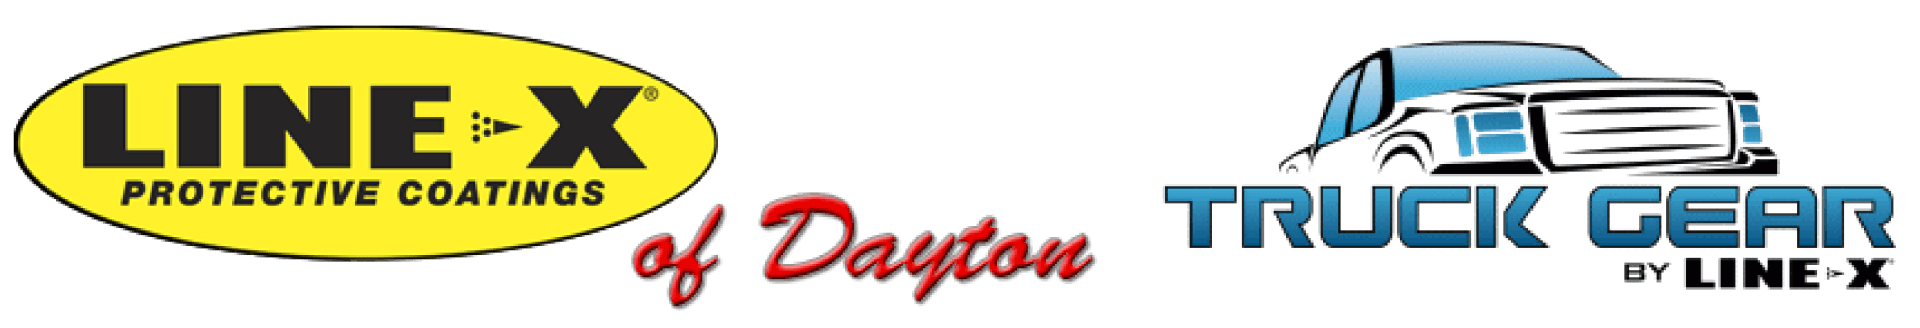 Line-X of Dayton